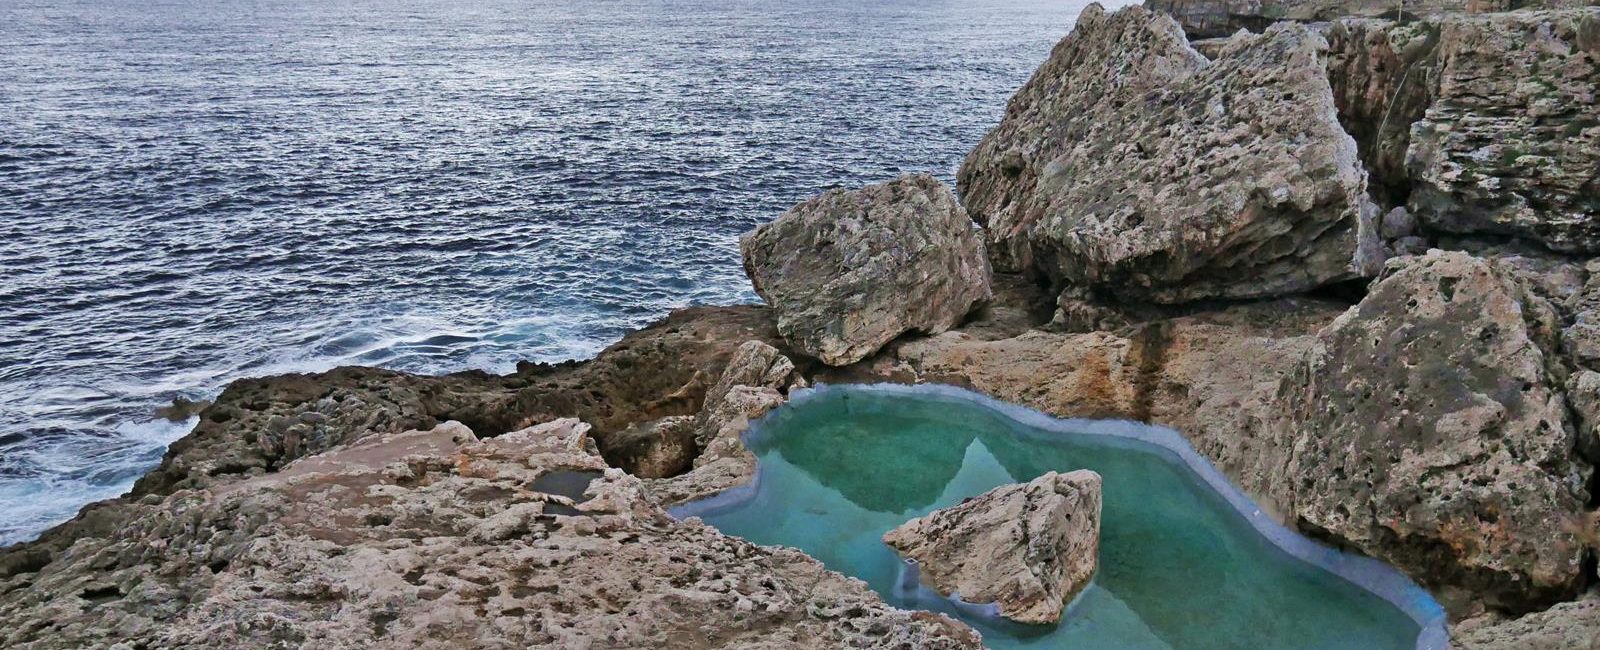 Naturalny basen na Majorce – Cala Egos.